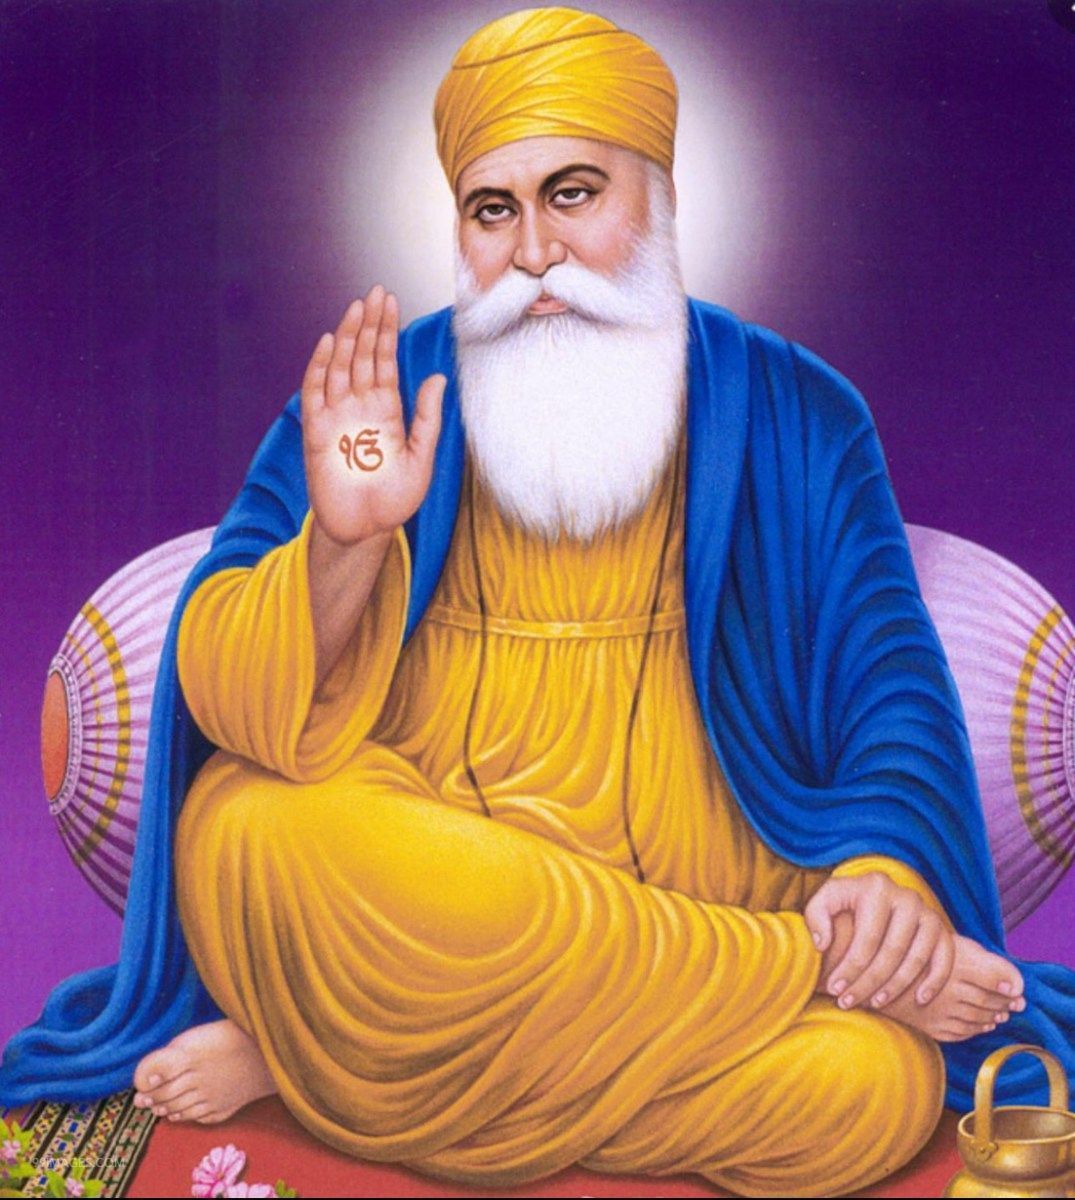 The Best of Guru Nanak Caption Quotes - CaptionWala | Caption Ideas